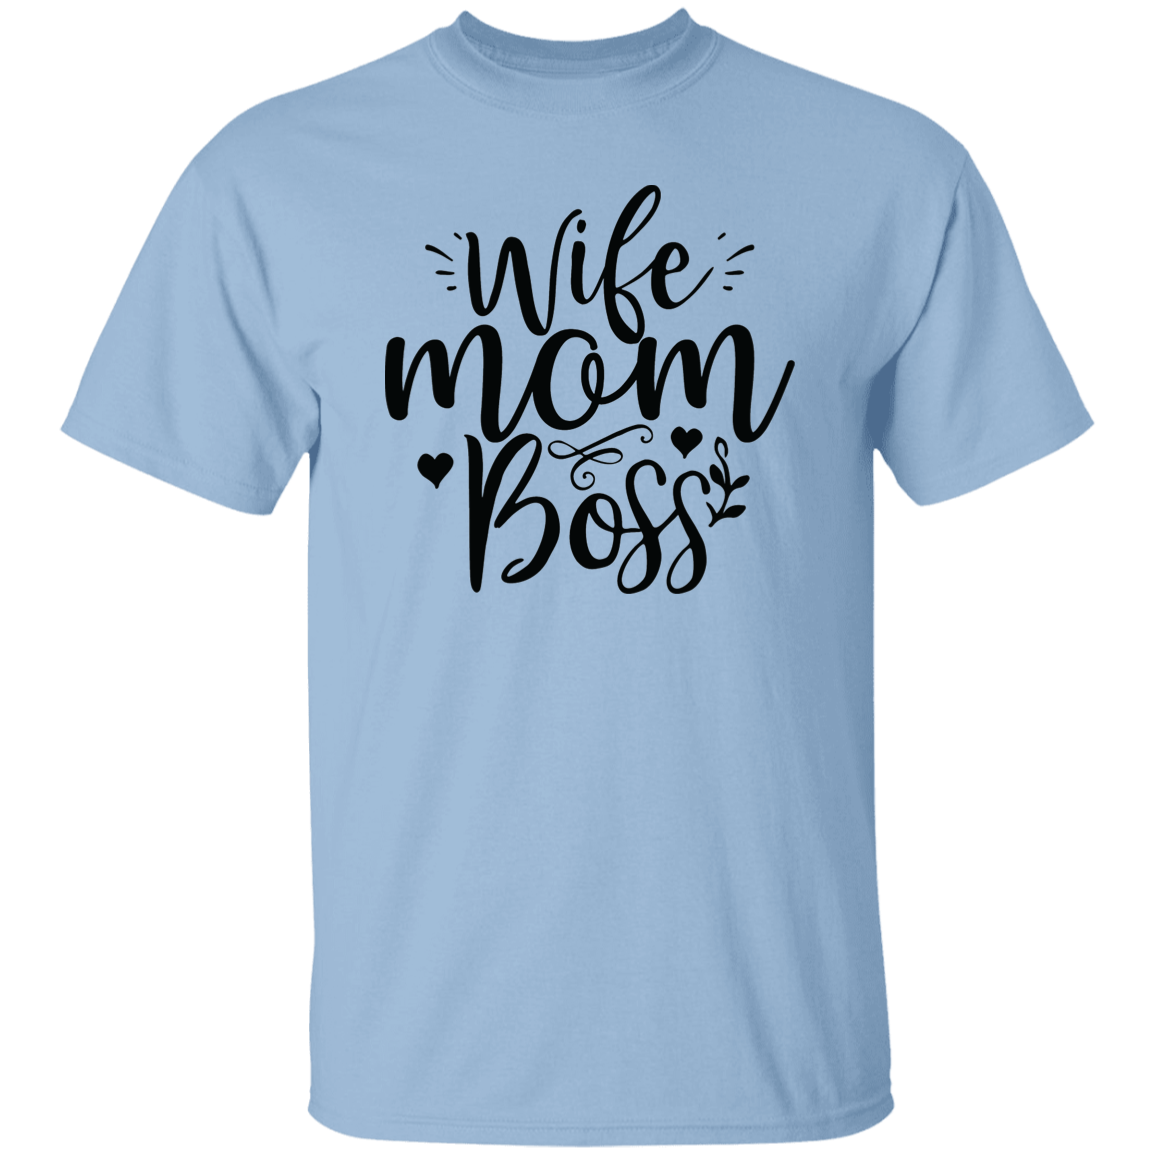 Wife Mom Boss Unisex Tee